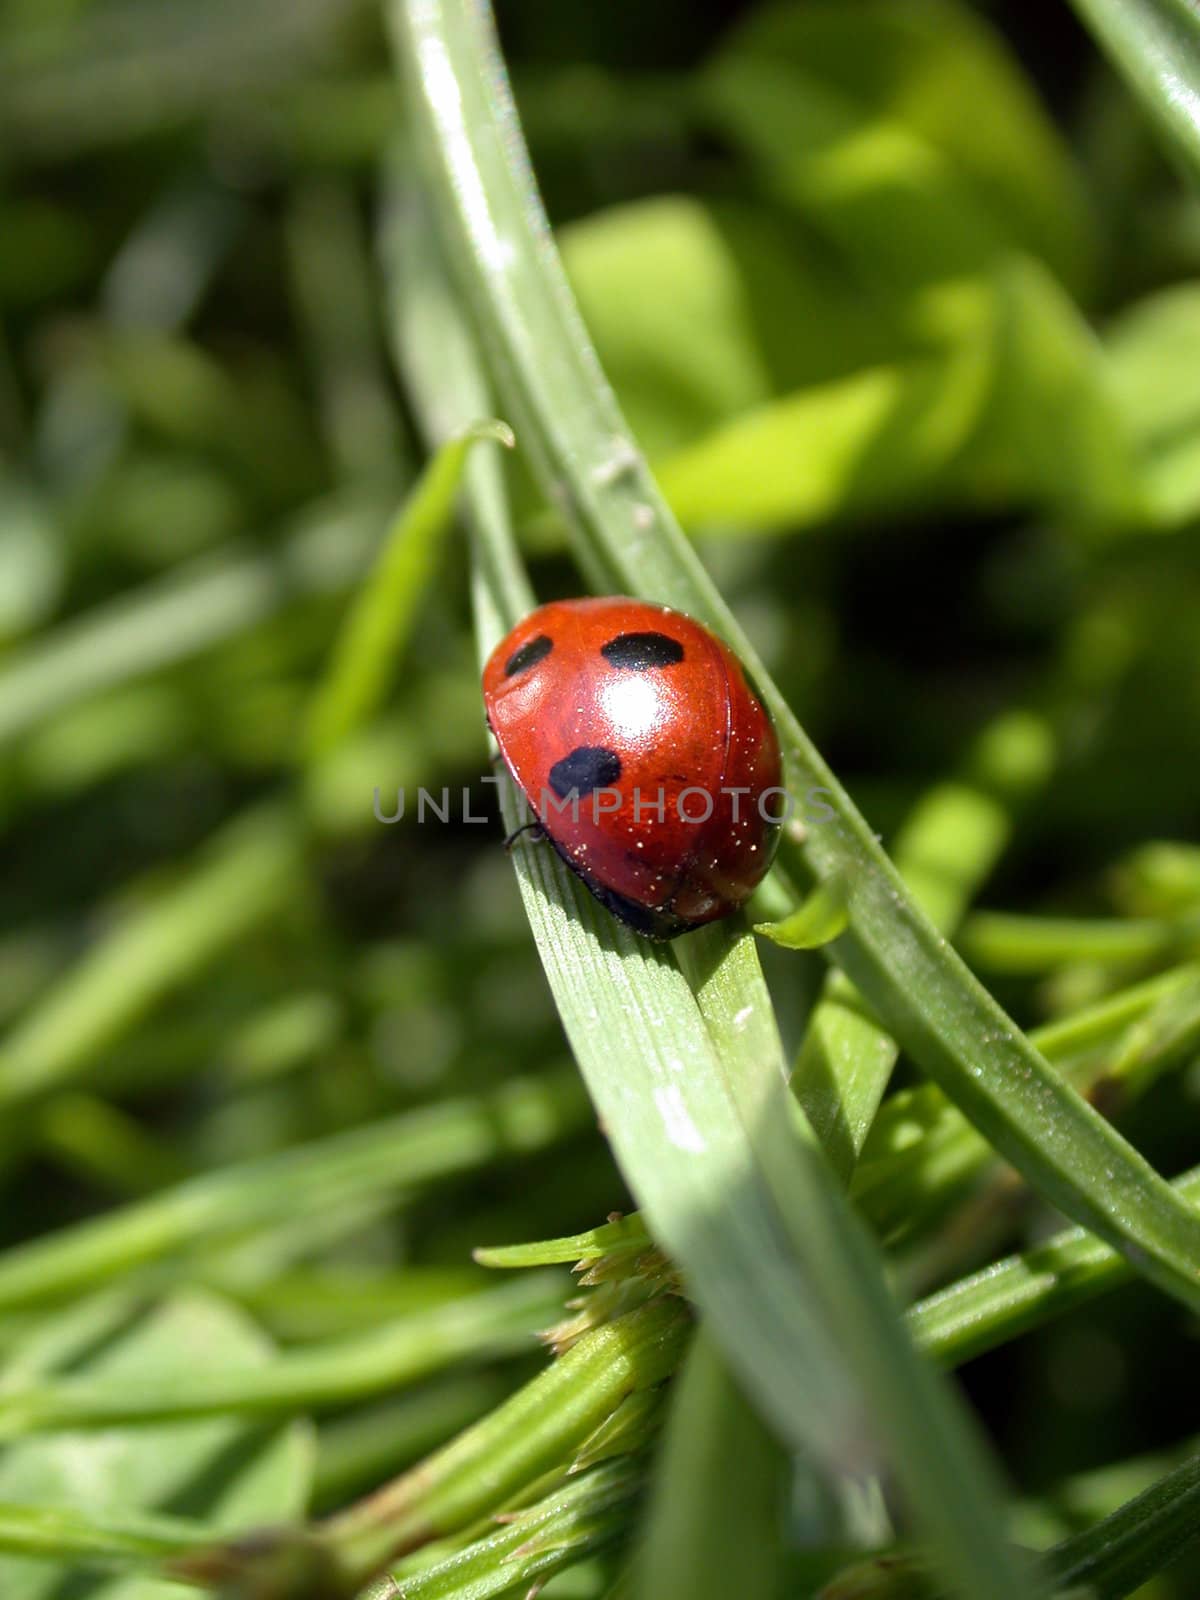 The ladybug on the plant.